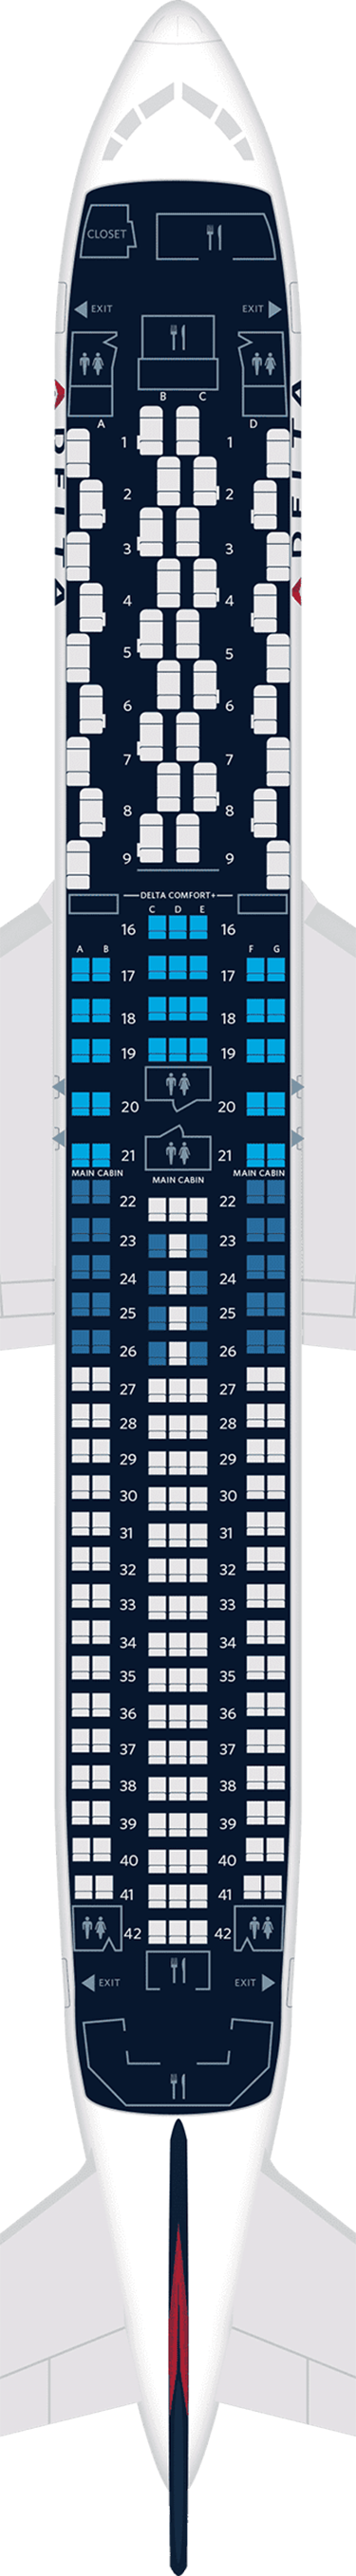 Boeing 767-300ER Seat Maps, Specs & Amenities | Delta Air Lines